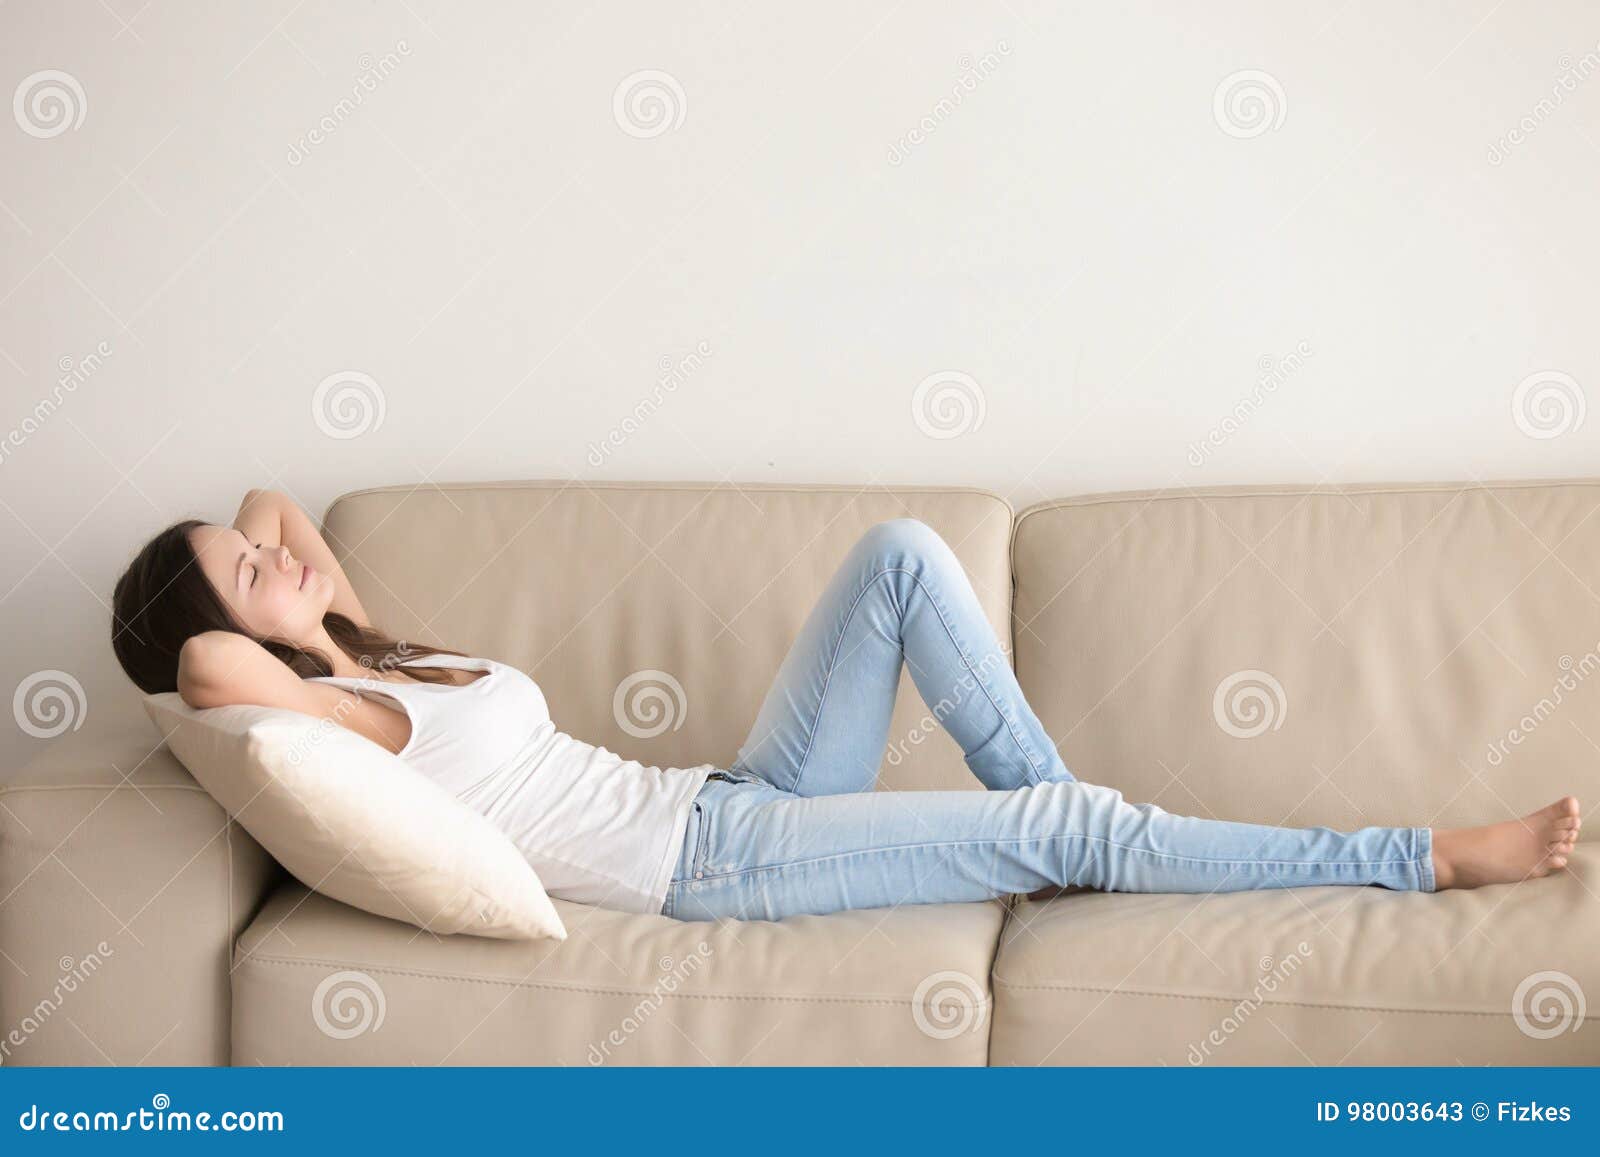 Datum electrode Illuminate Νέα γυναίκα που βρίσκεται στον καναπέ, που χαλαρώνει με τα χέρια πίσω από  το κεφάλι Στοκ Εικόνα - εικόνα από lifestyle: 98003643